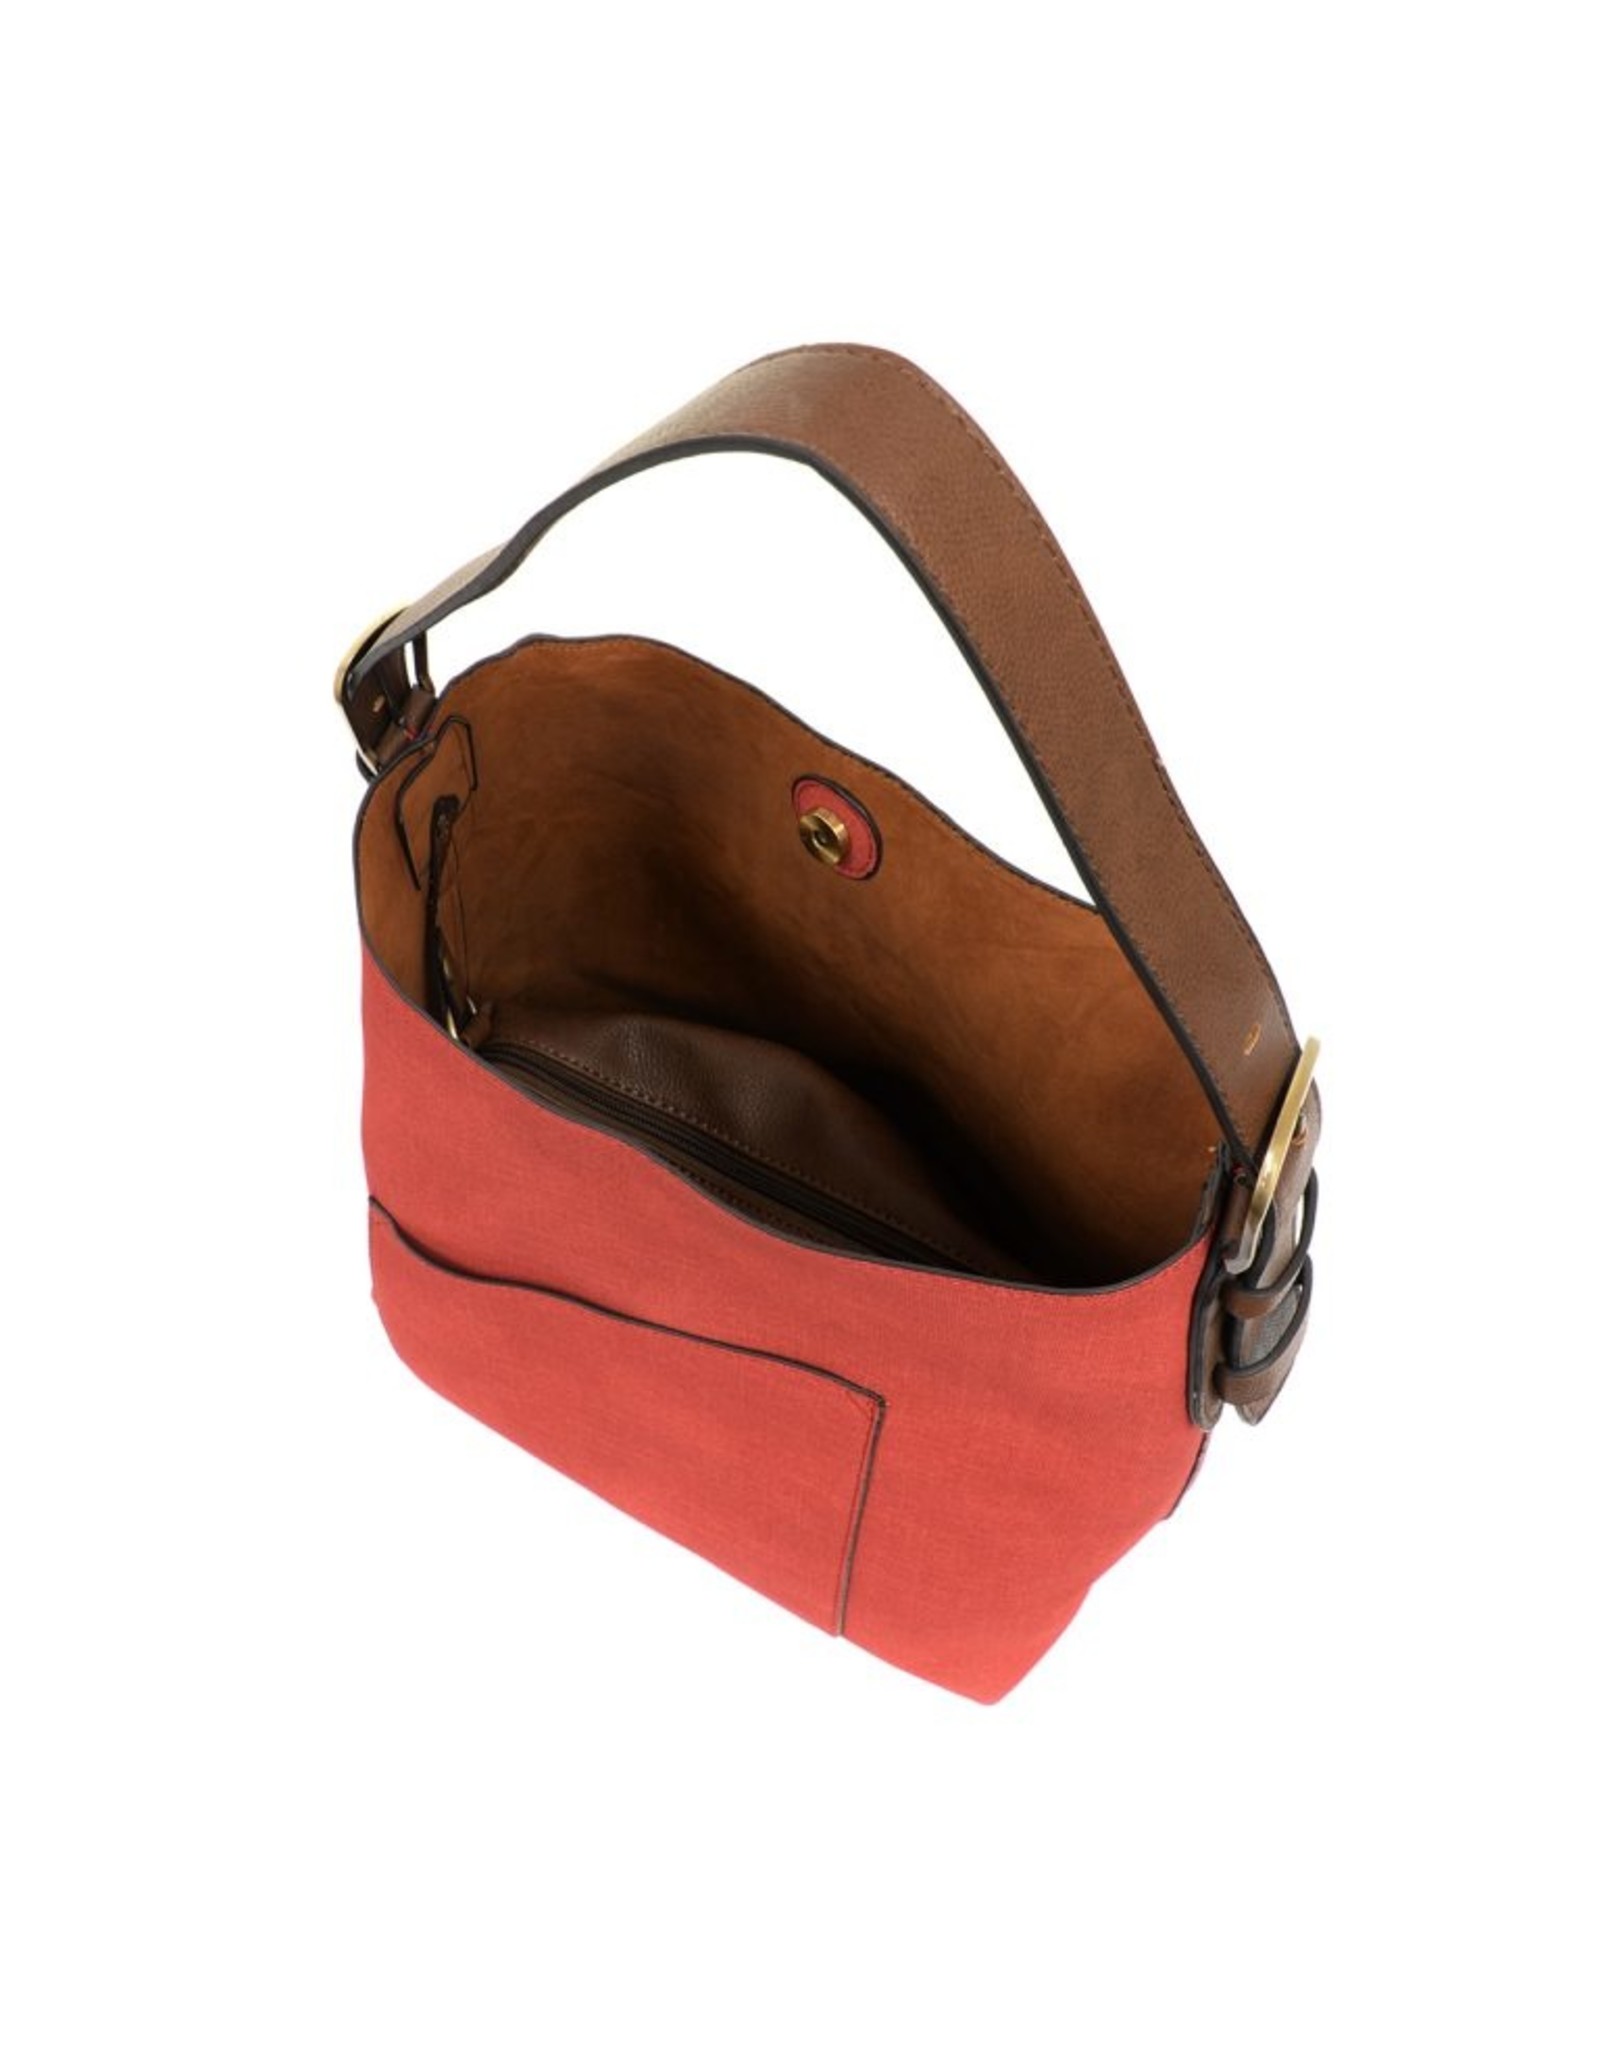 Joy Susan Hobo Handle Handbag-Red Linen/Coffee